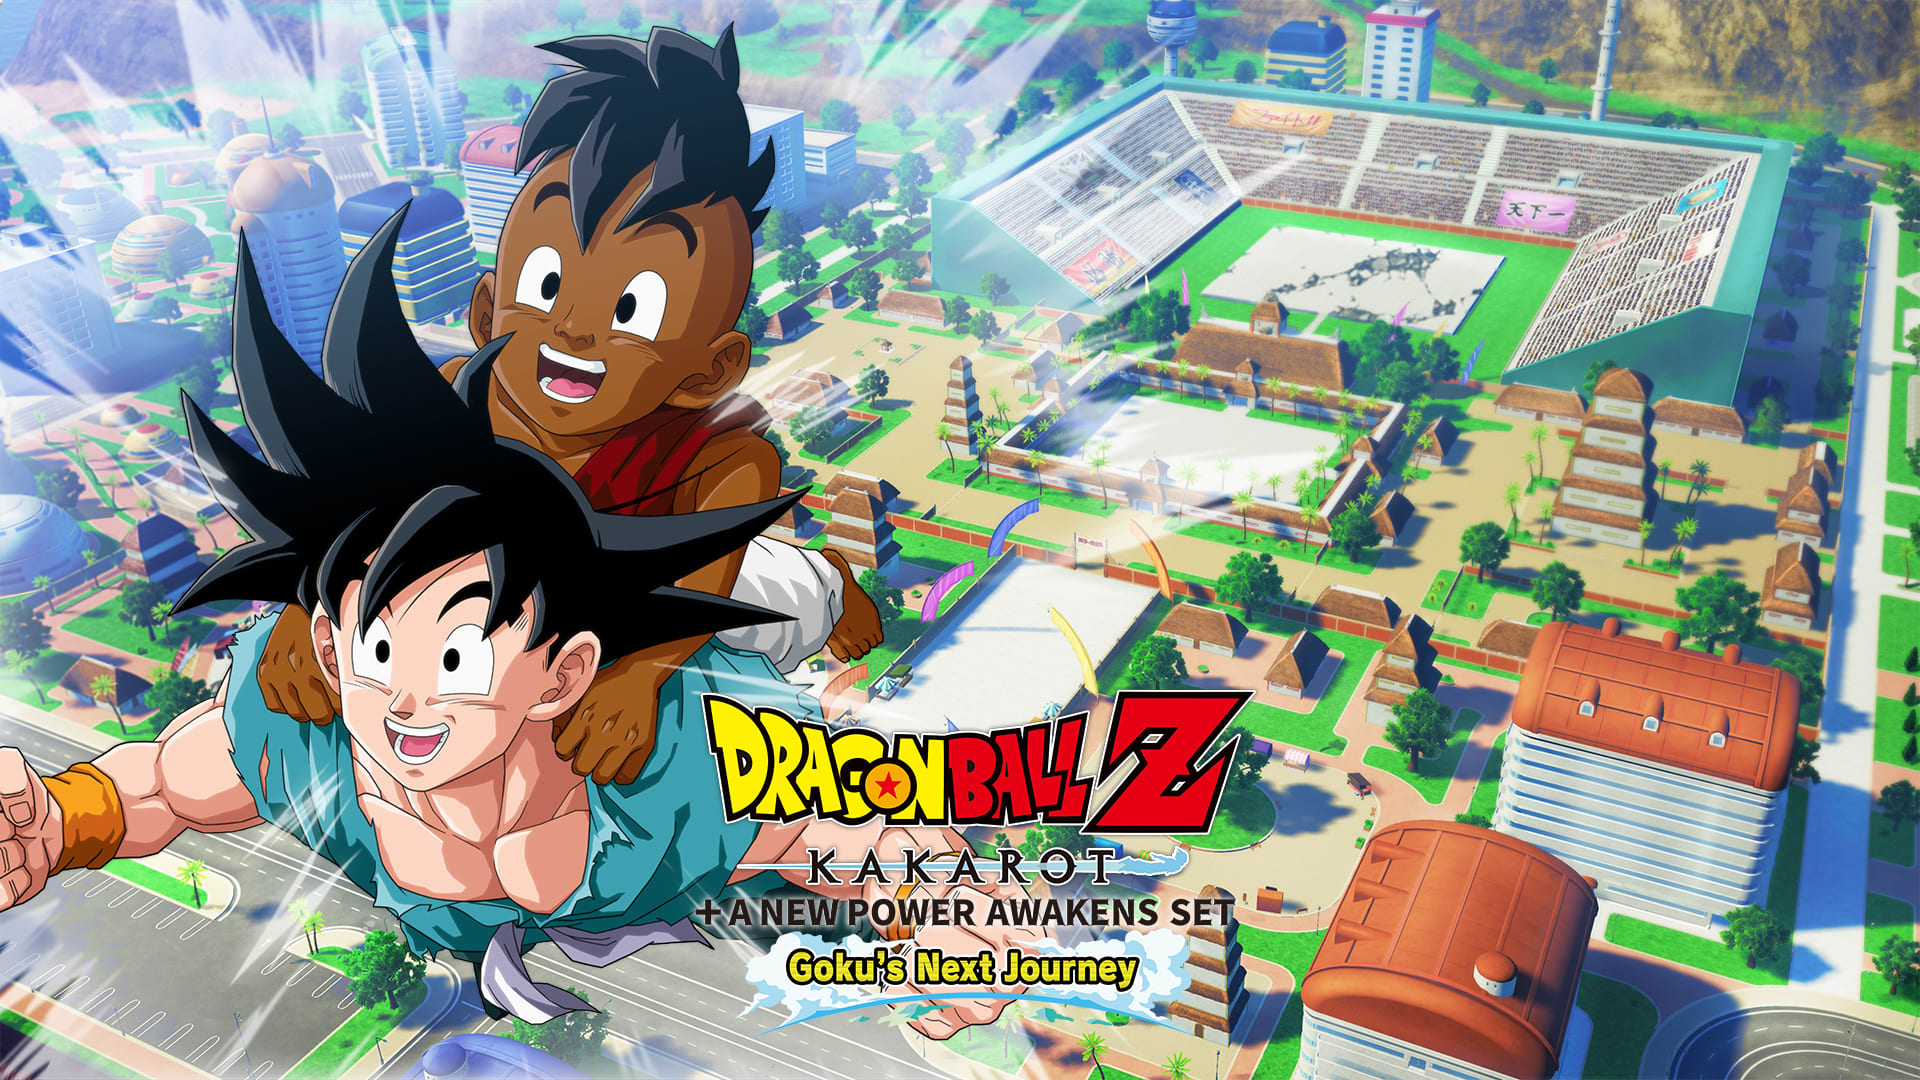 DRAGON BALL Z: KAKAROT + A NEW POWER AWAKENS SET - Goku's Next Journey